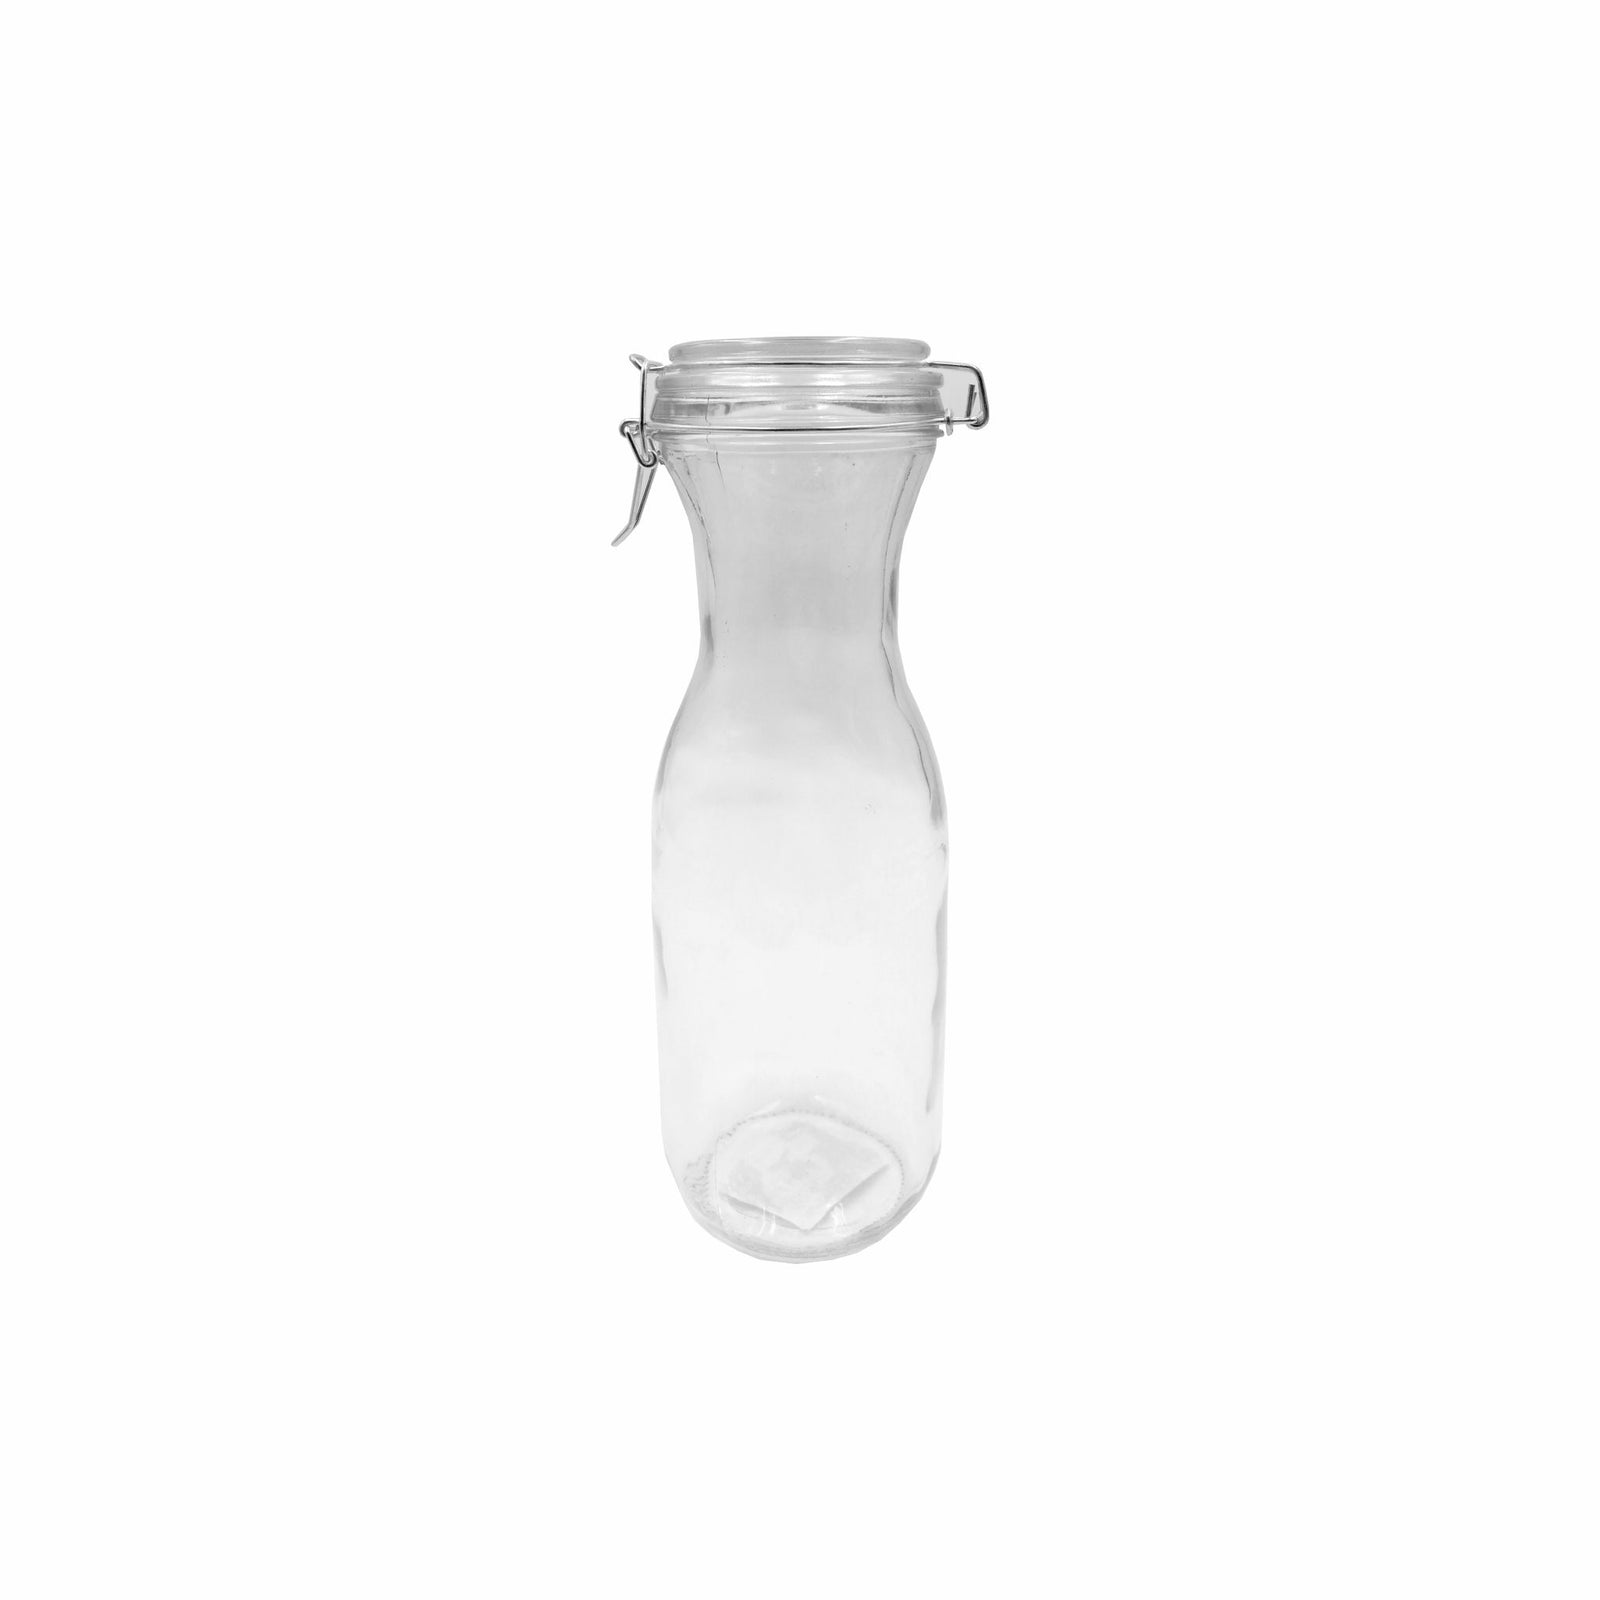 REGENT GLASS CARAFE WITH RESEALABLE CLIP TOP GLASS LID 6 PACK, 1LT (265X90MM DIA) Regent